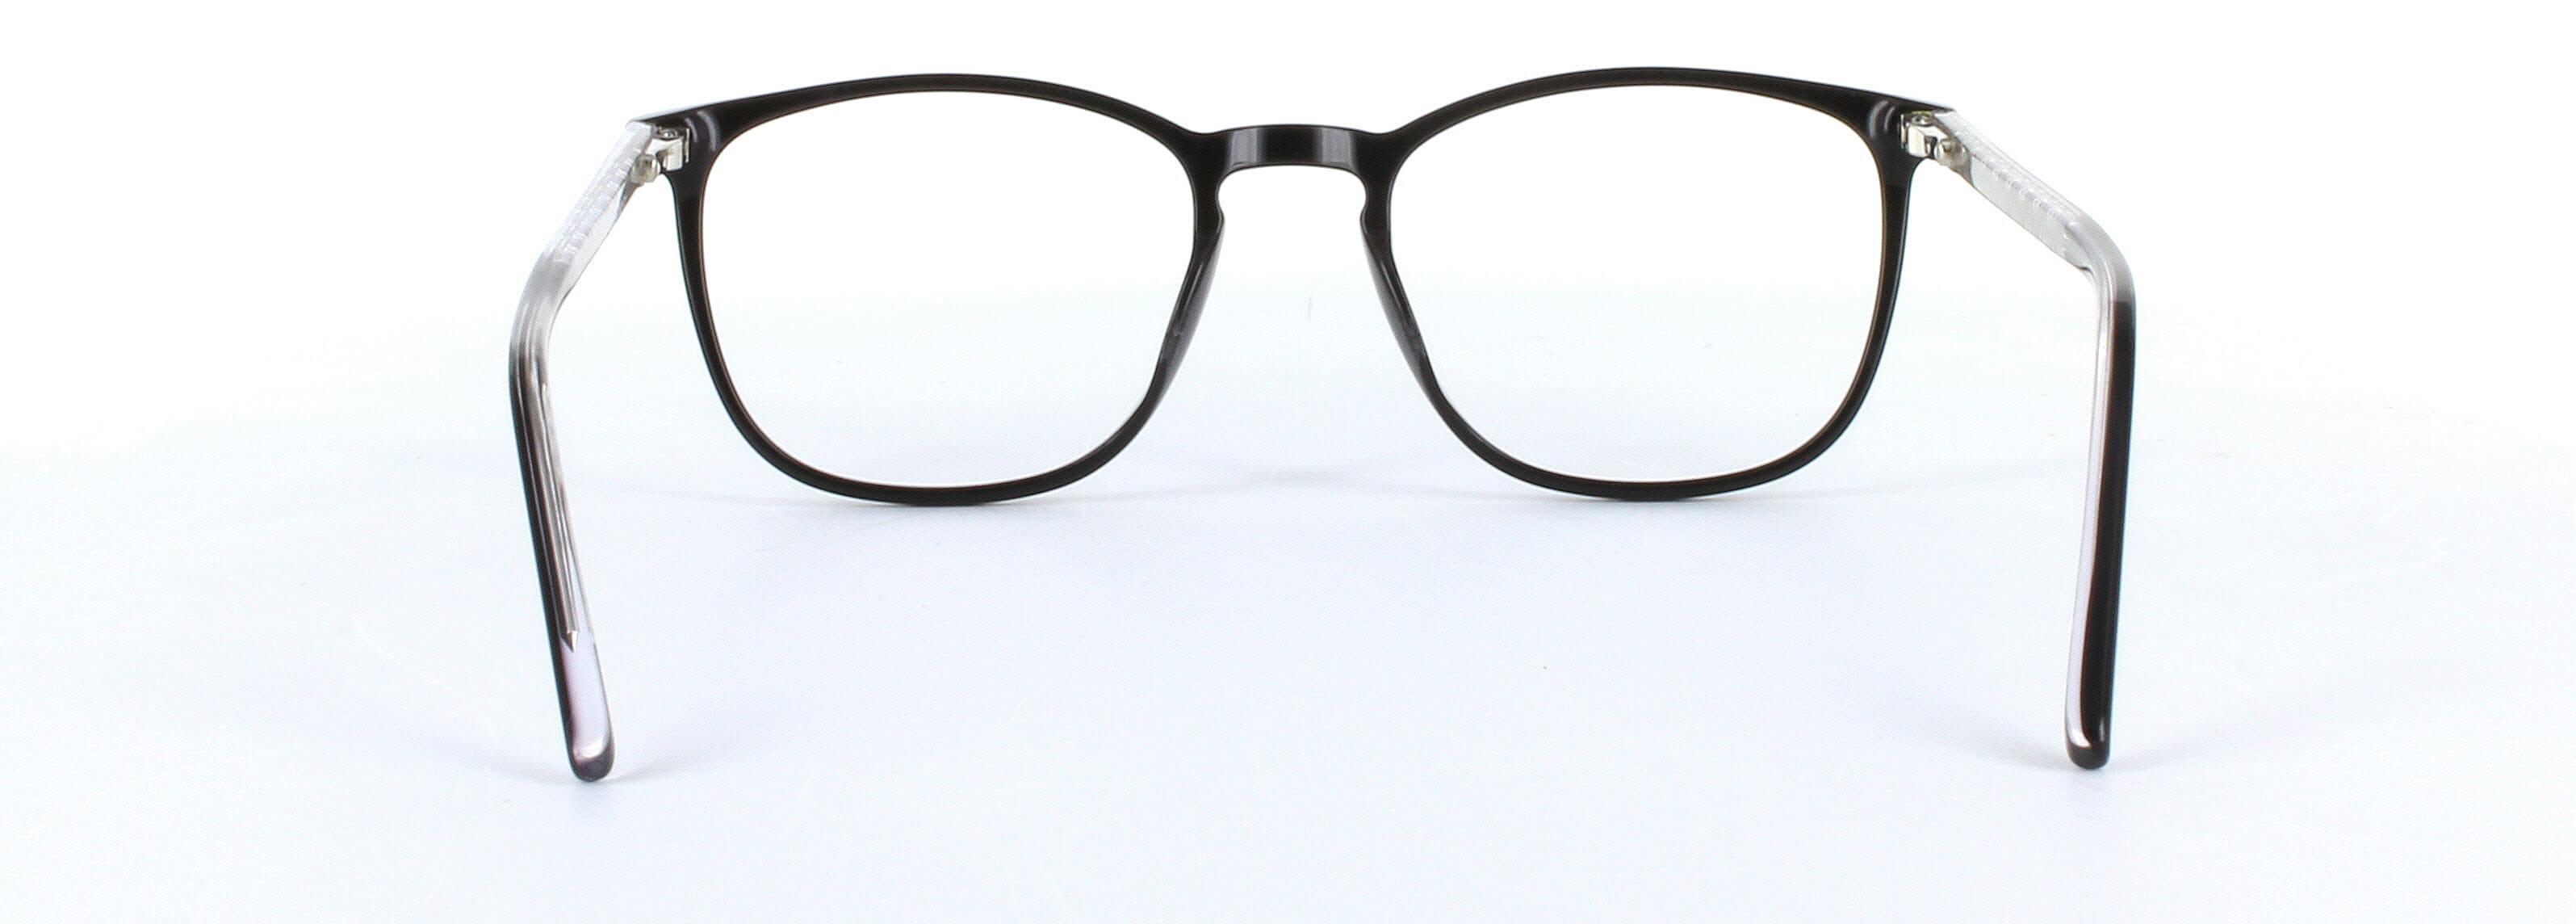 Mariana Black Full Rim Round Plastic Glasses - Image View 3